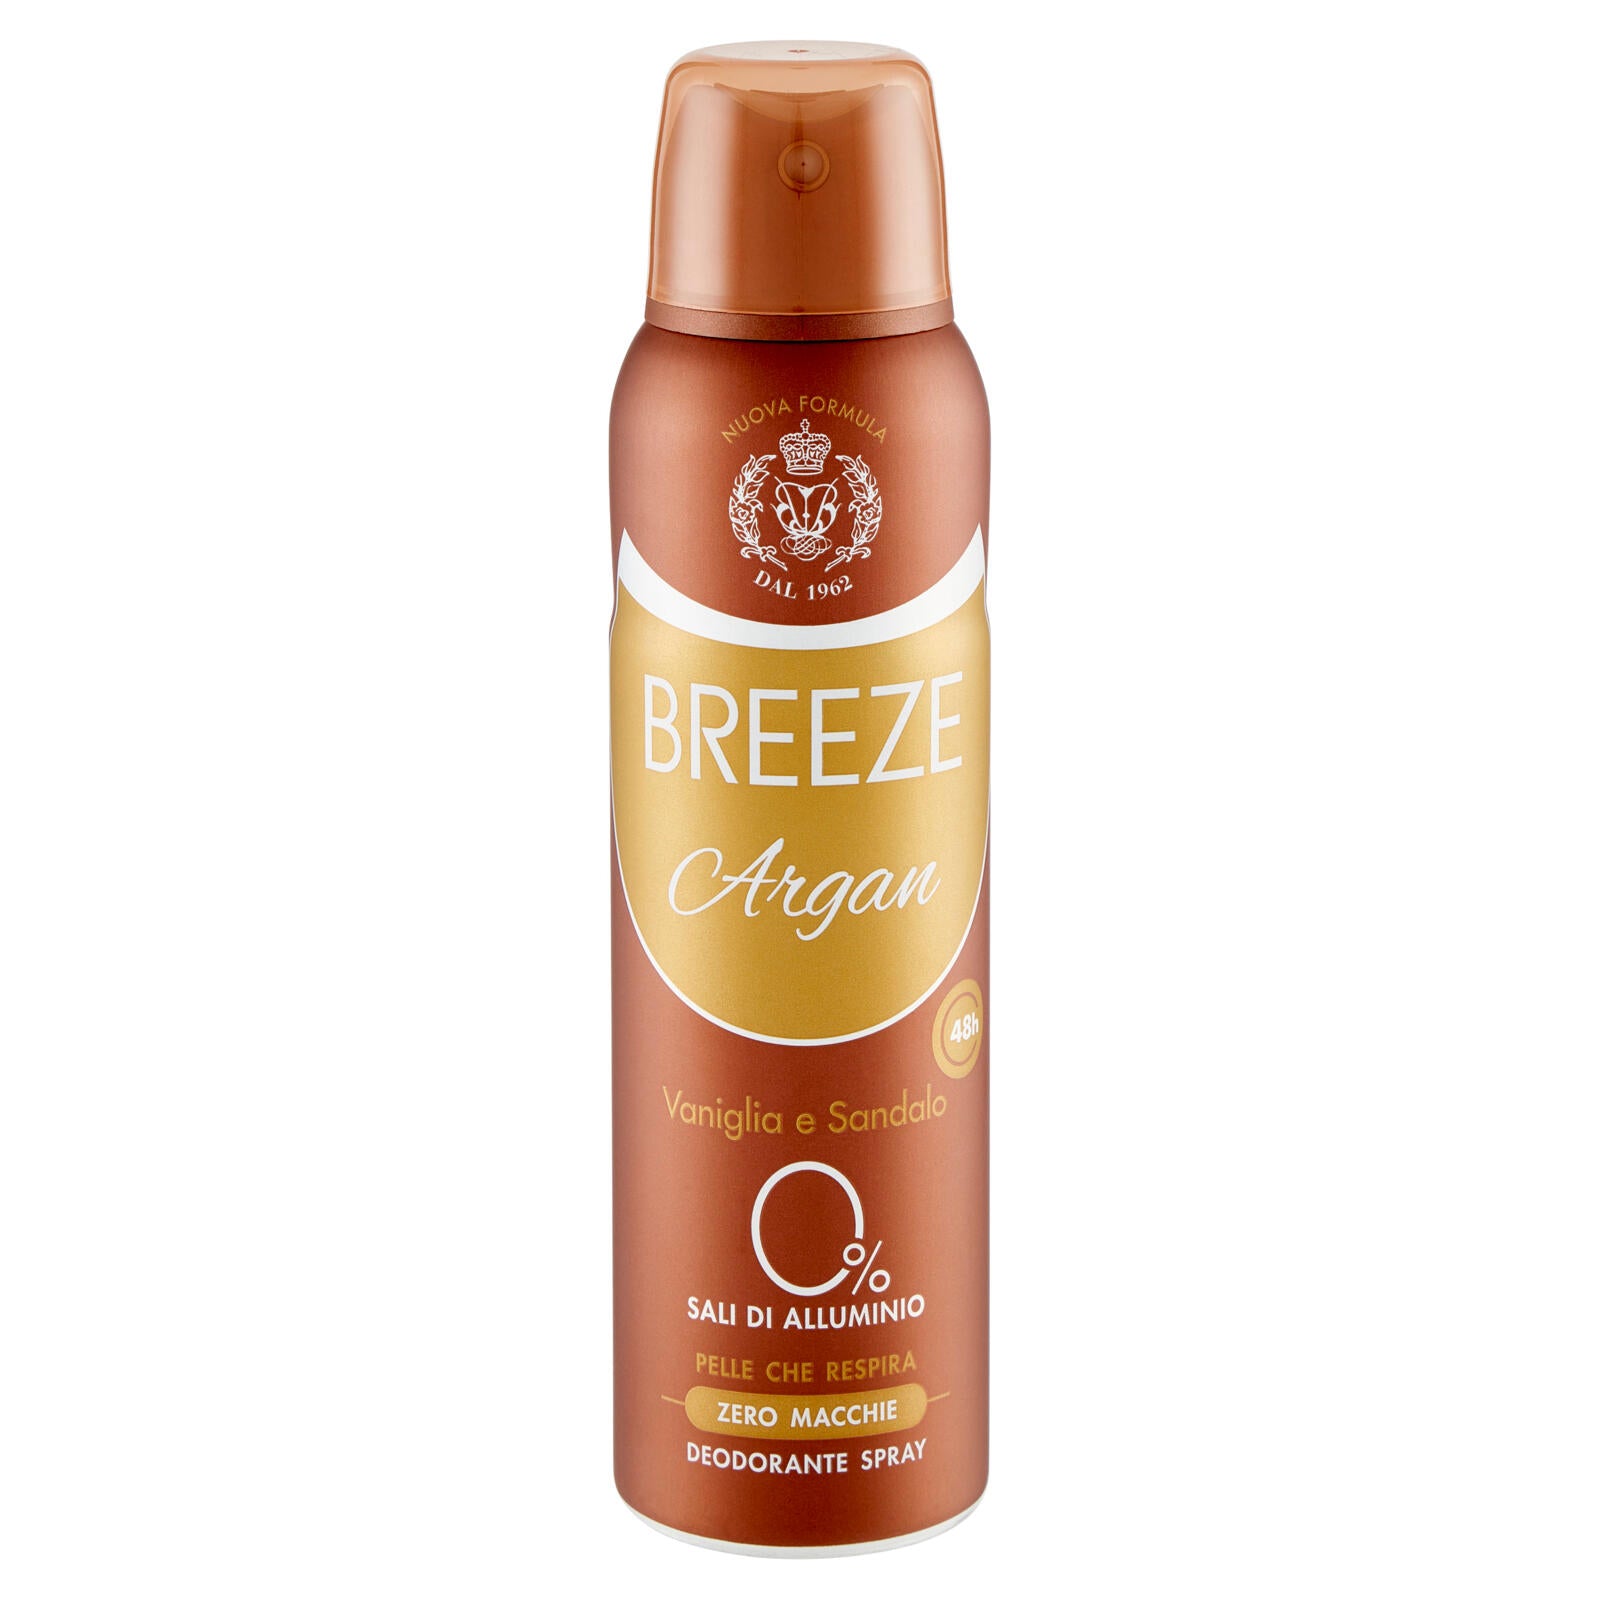 Breeze Argan Deodorante Spray 150 mL